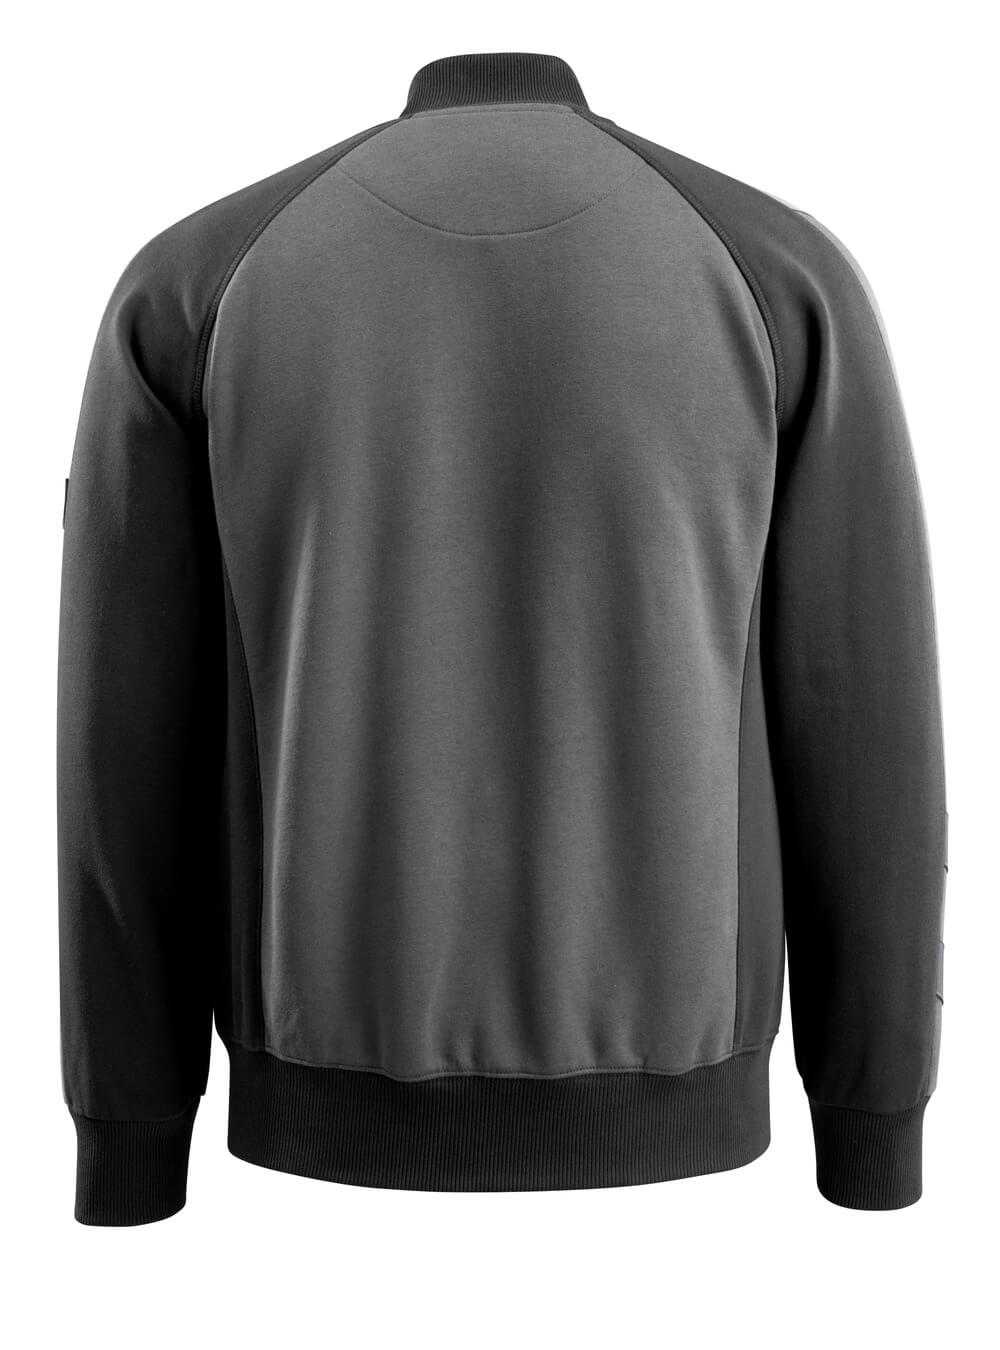 Mascot UNIQUE  Amberg Sweatshirt with zipper 50565 dark anthracite/black